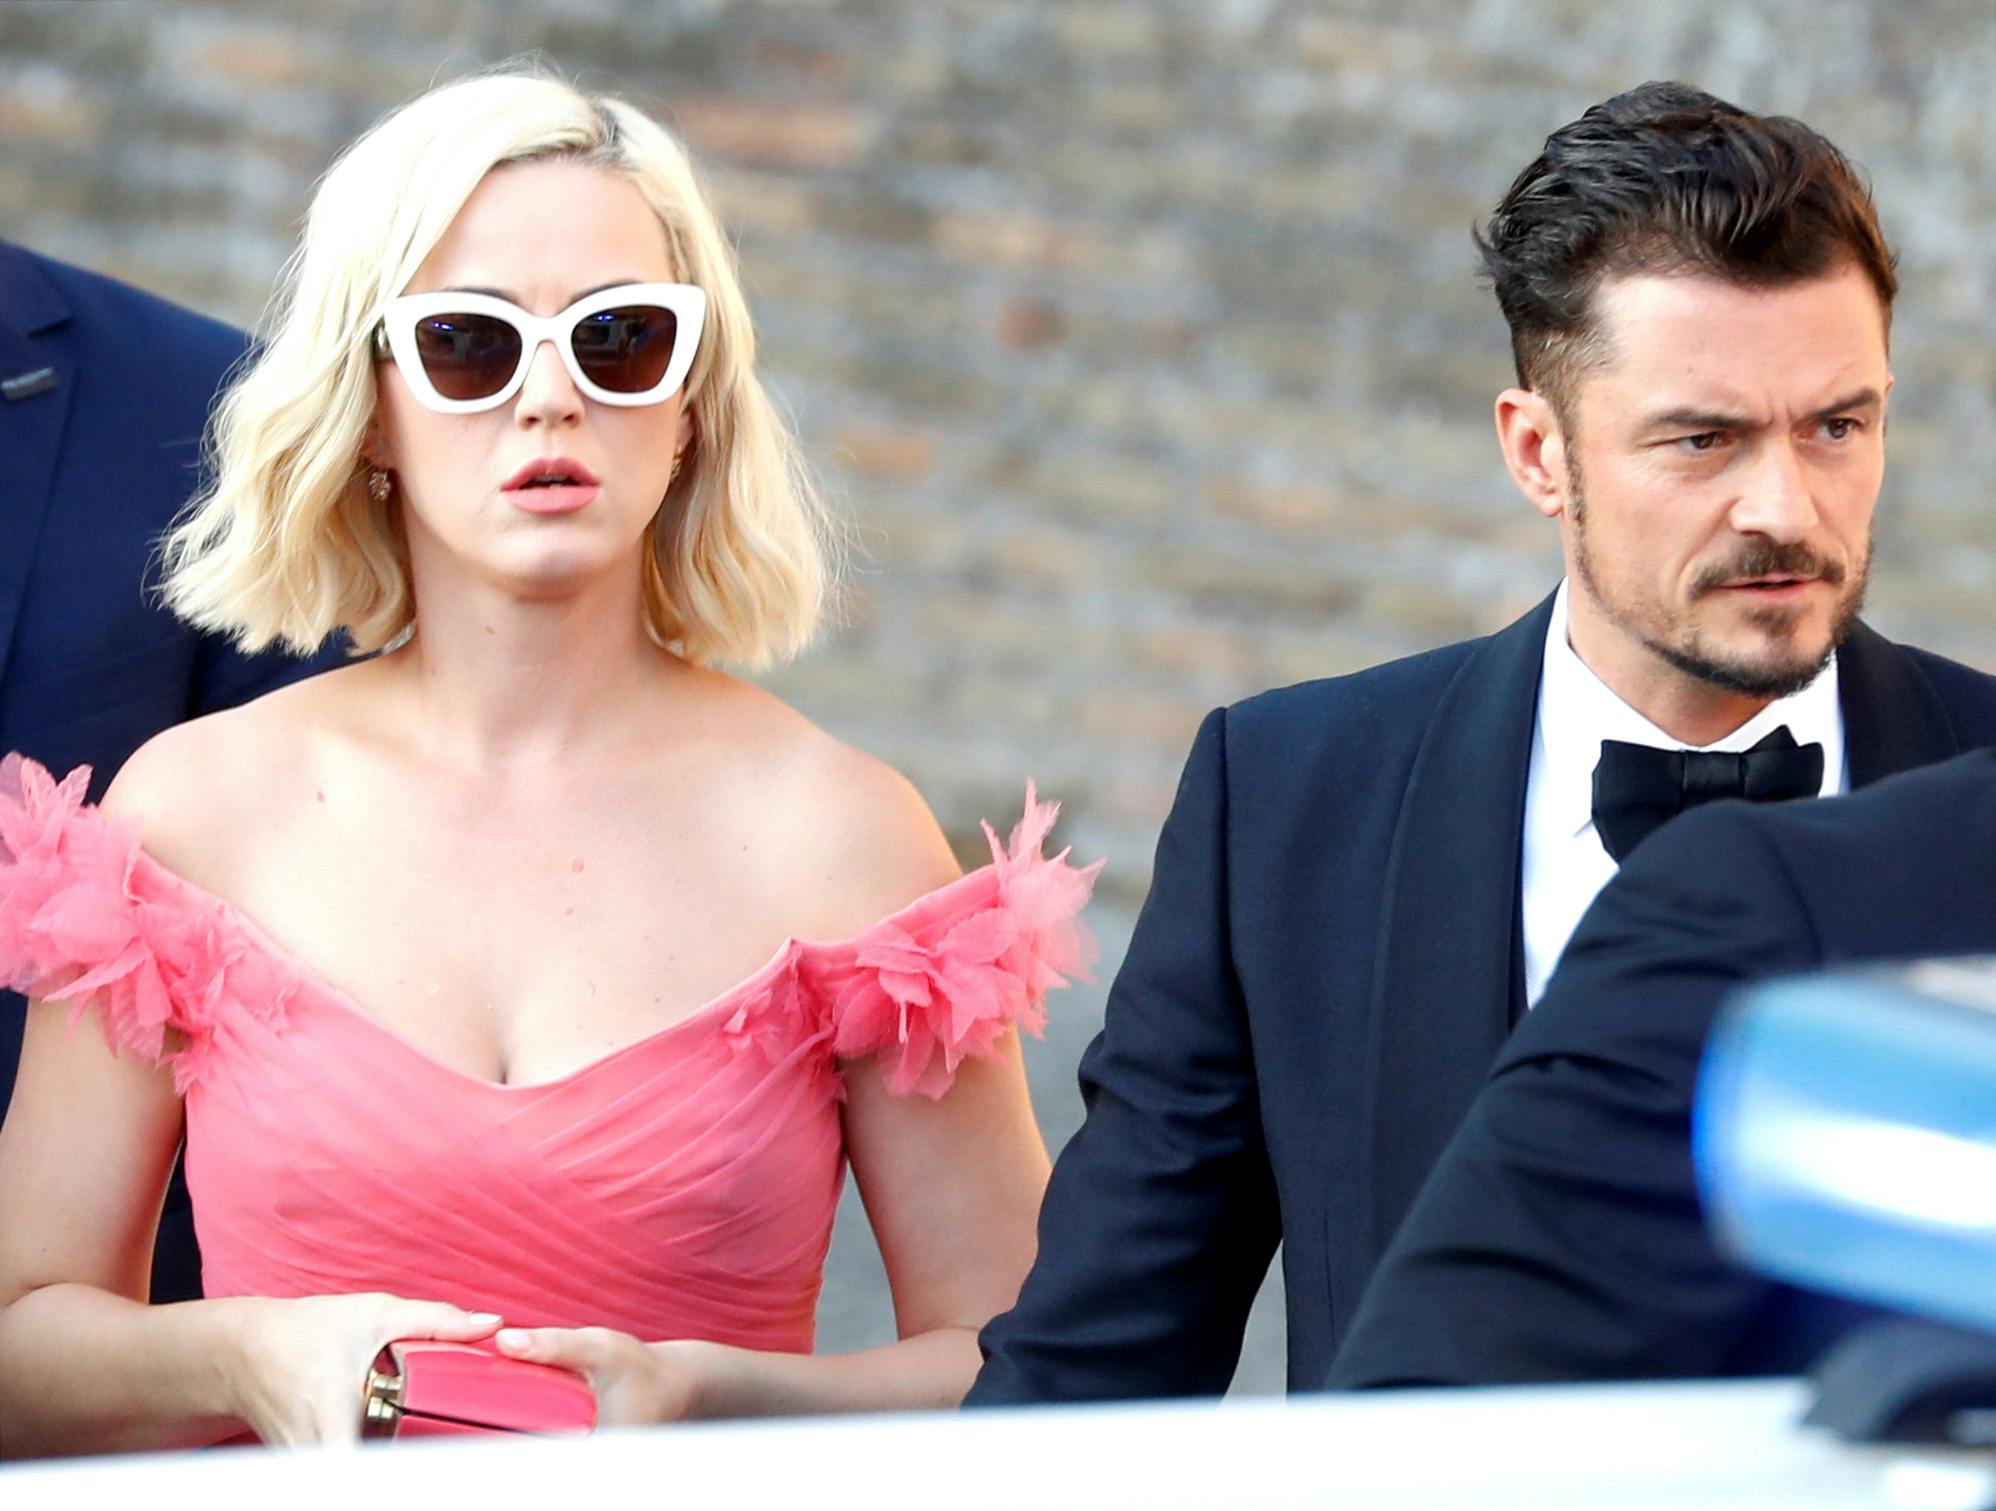 Singer Katy Perry and actor Orlando Bloom arrive to attend the wedding of fashion designer Misha Nonoo at Villa Aurelia in Rome, Italy, September 20, 2019. REUTERS/Yara Nardi